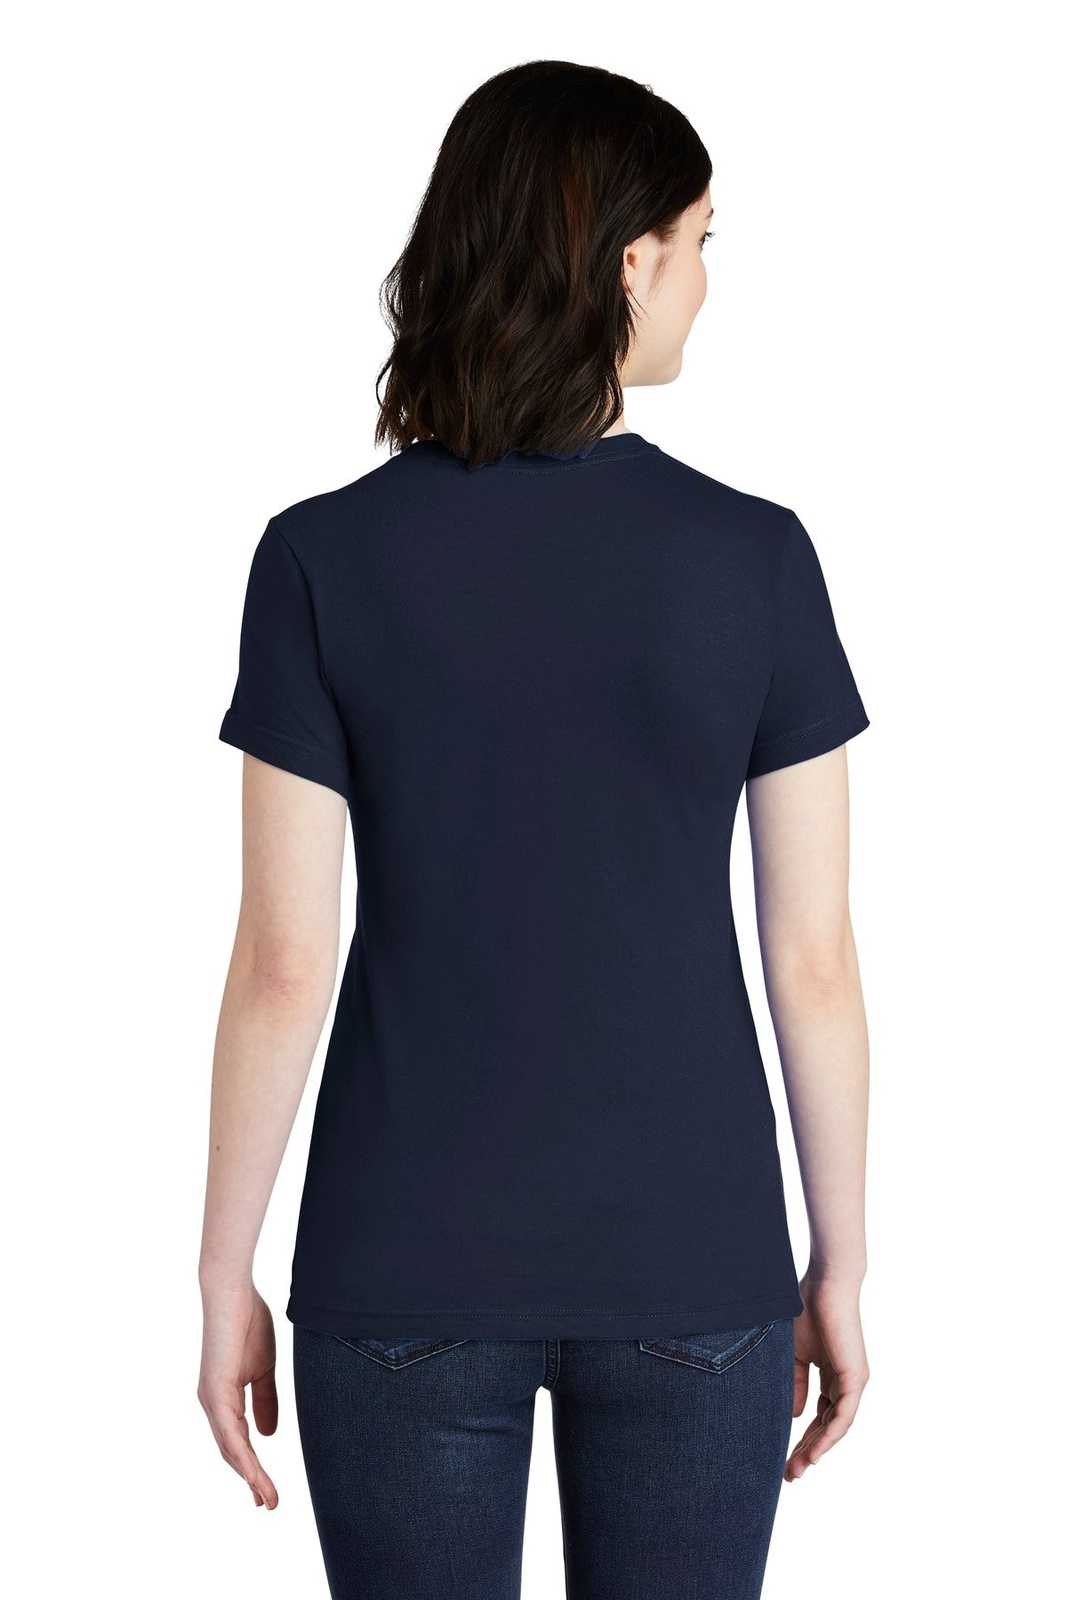 American Apparel 2102W Women's Fine Jersey T-Shirt - Navy - HIT a Double